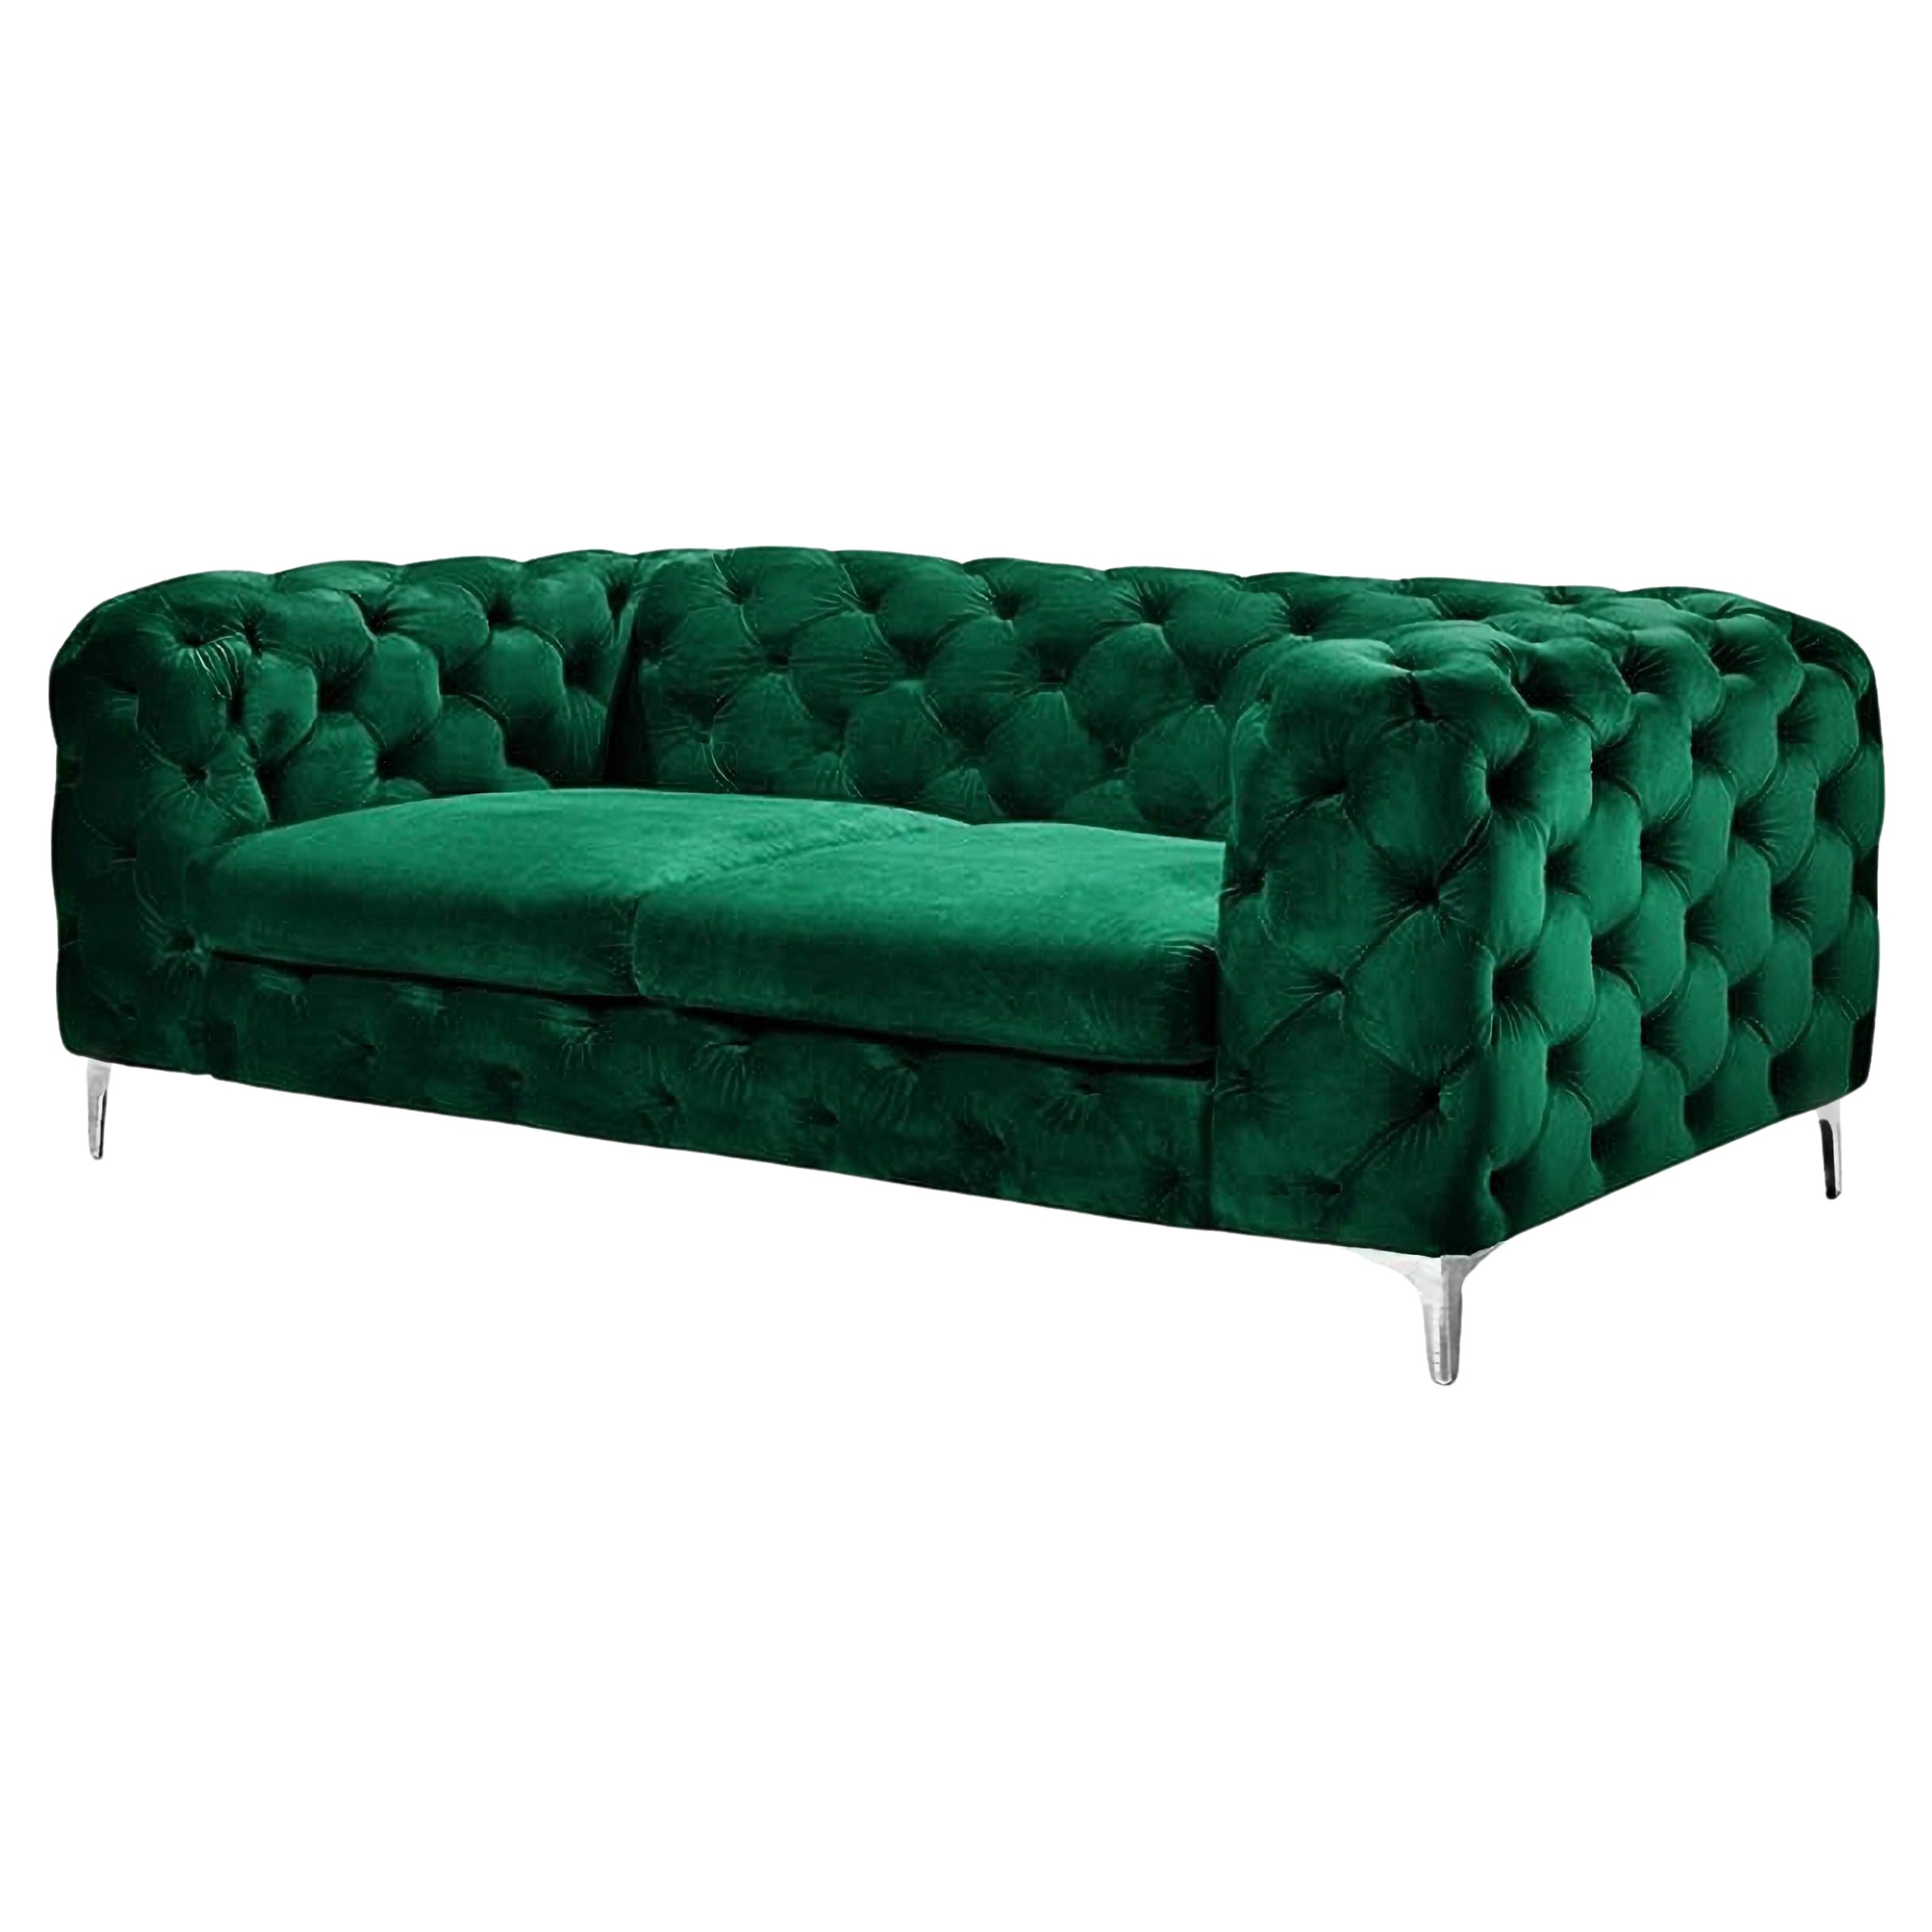 Chester 2 Seater-Sofa, grüner Samt, neu